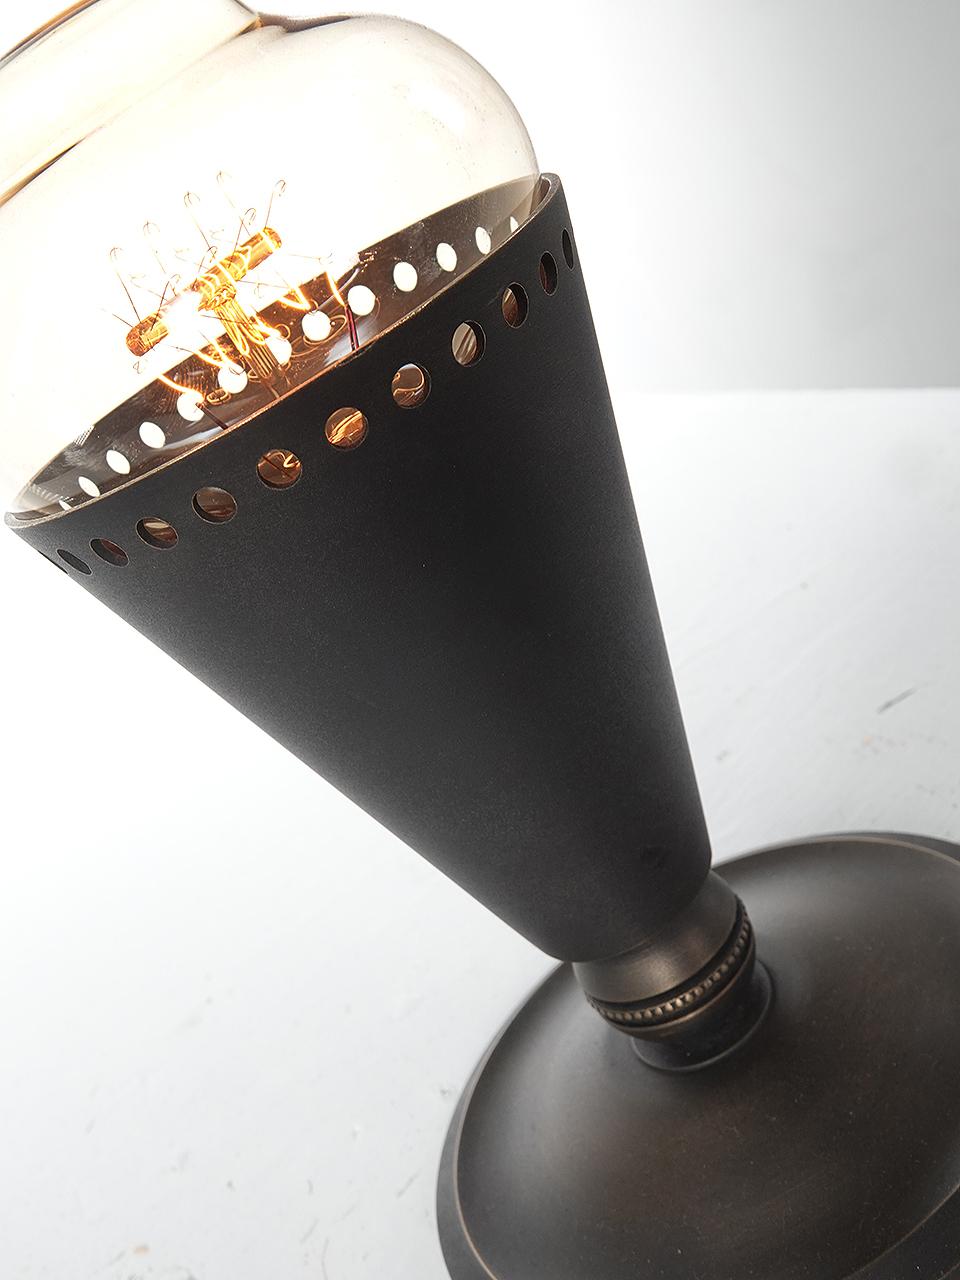 Mid-Century Modern Cone Flush Mount Lamp